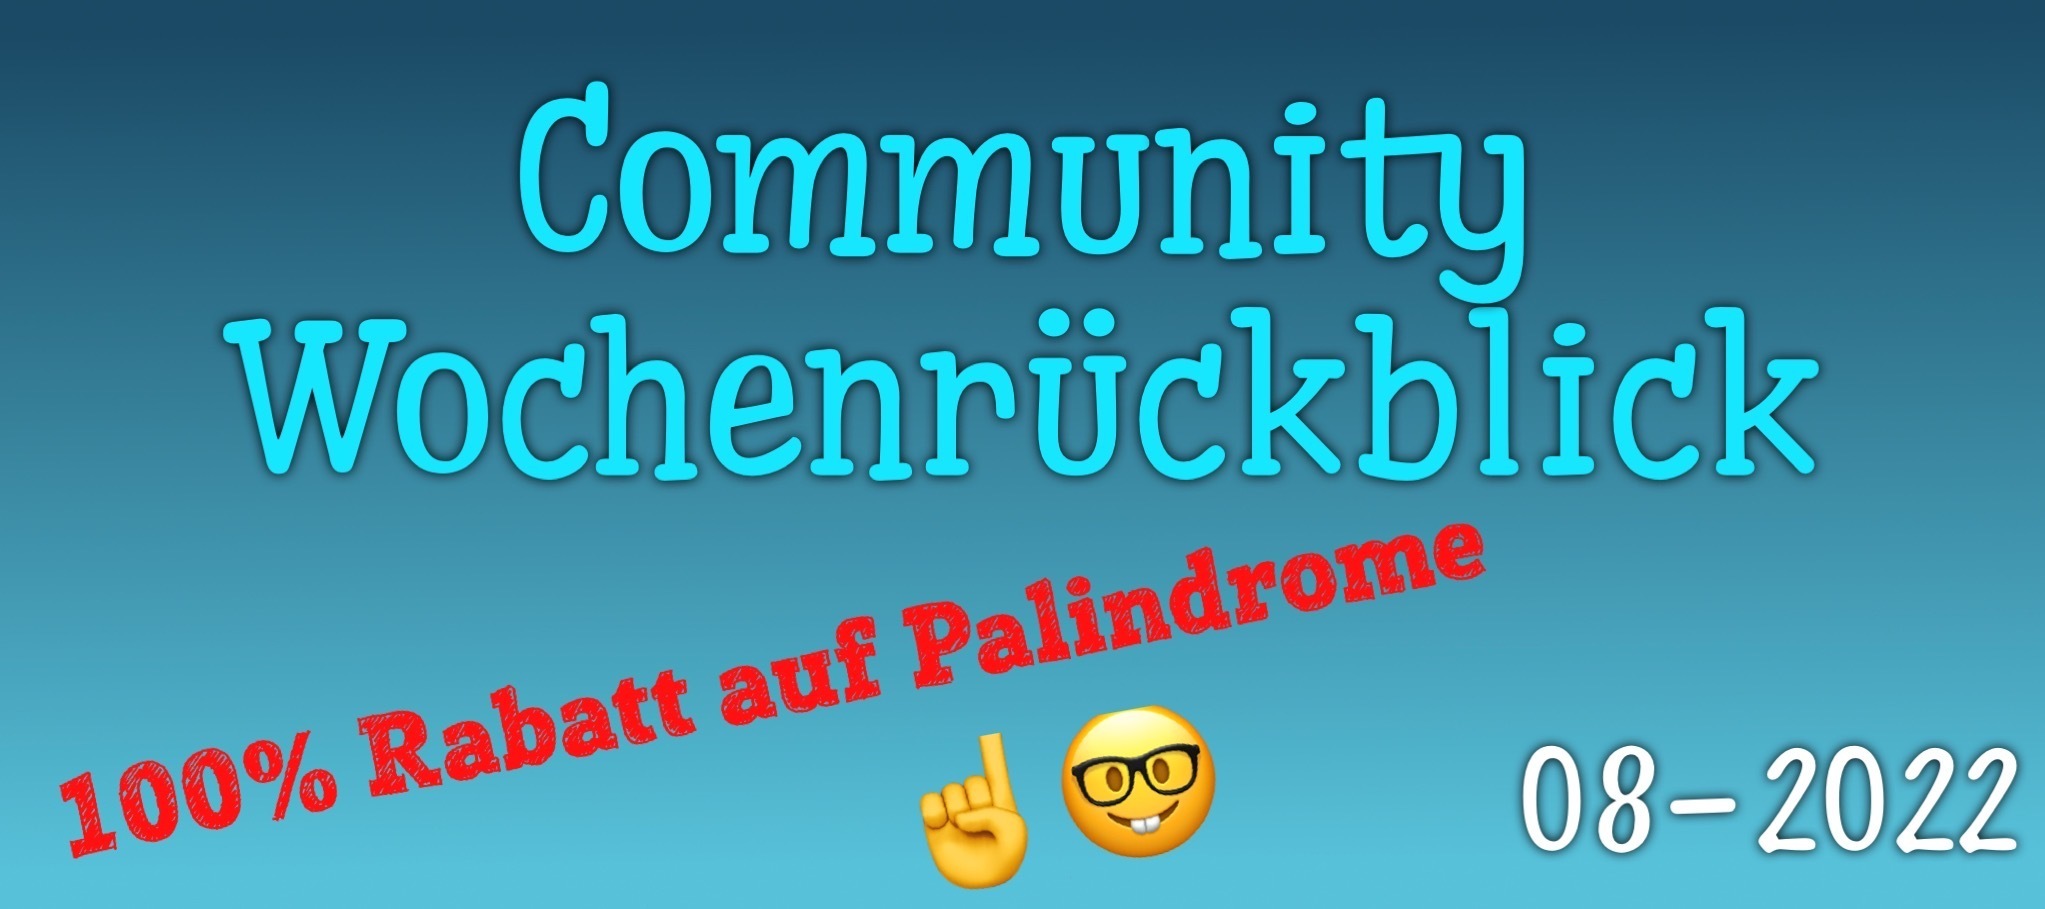 Community Wochenrückblick #08/2022